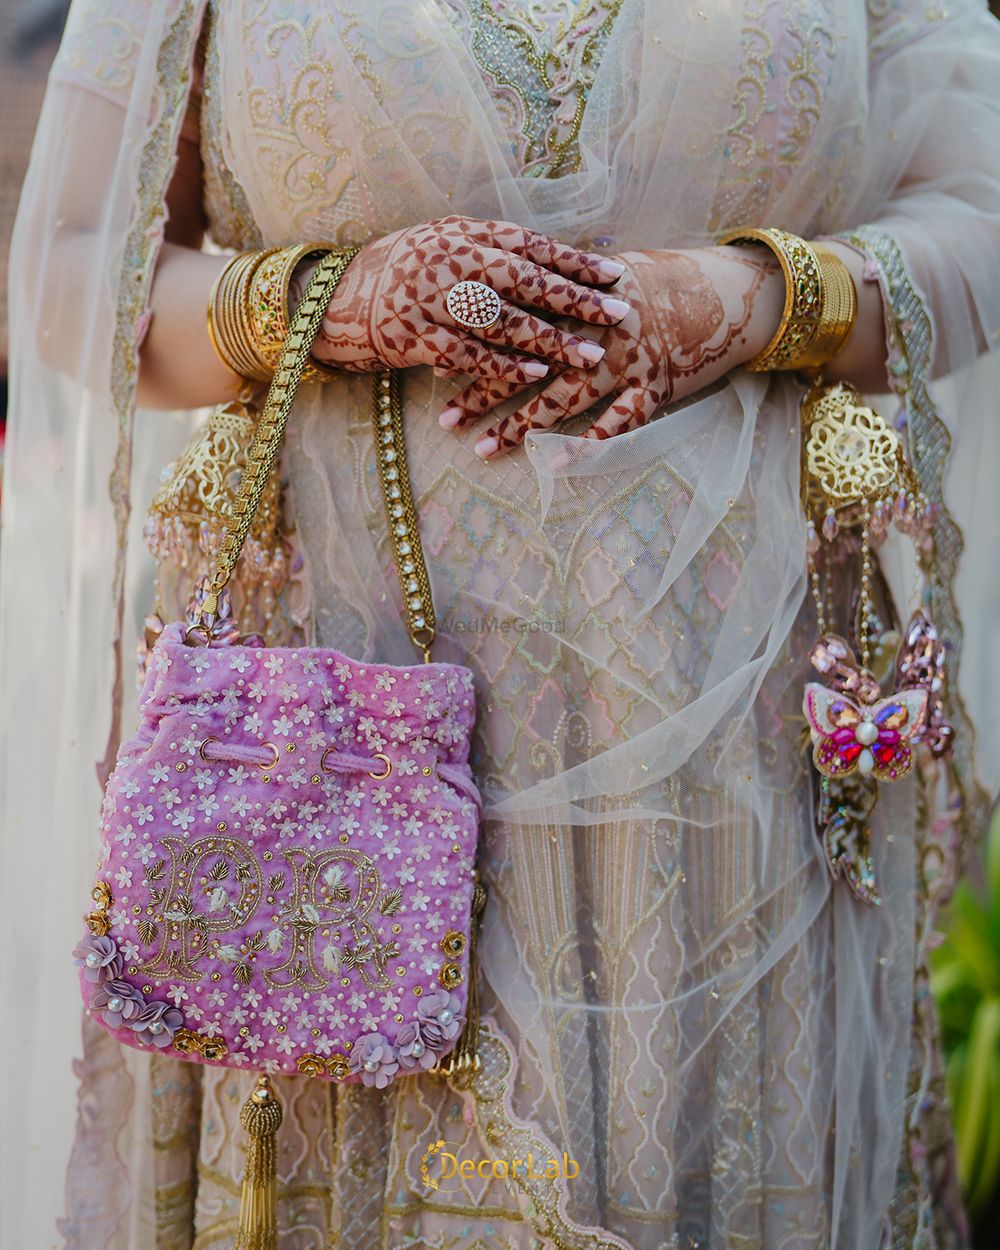 Photo From Punjabi Style - Destination Wedding x Kerala Tradition - By Decor Lab Events